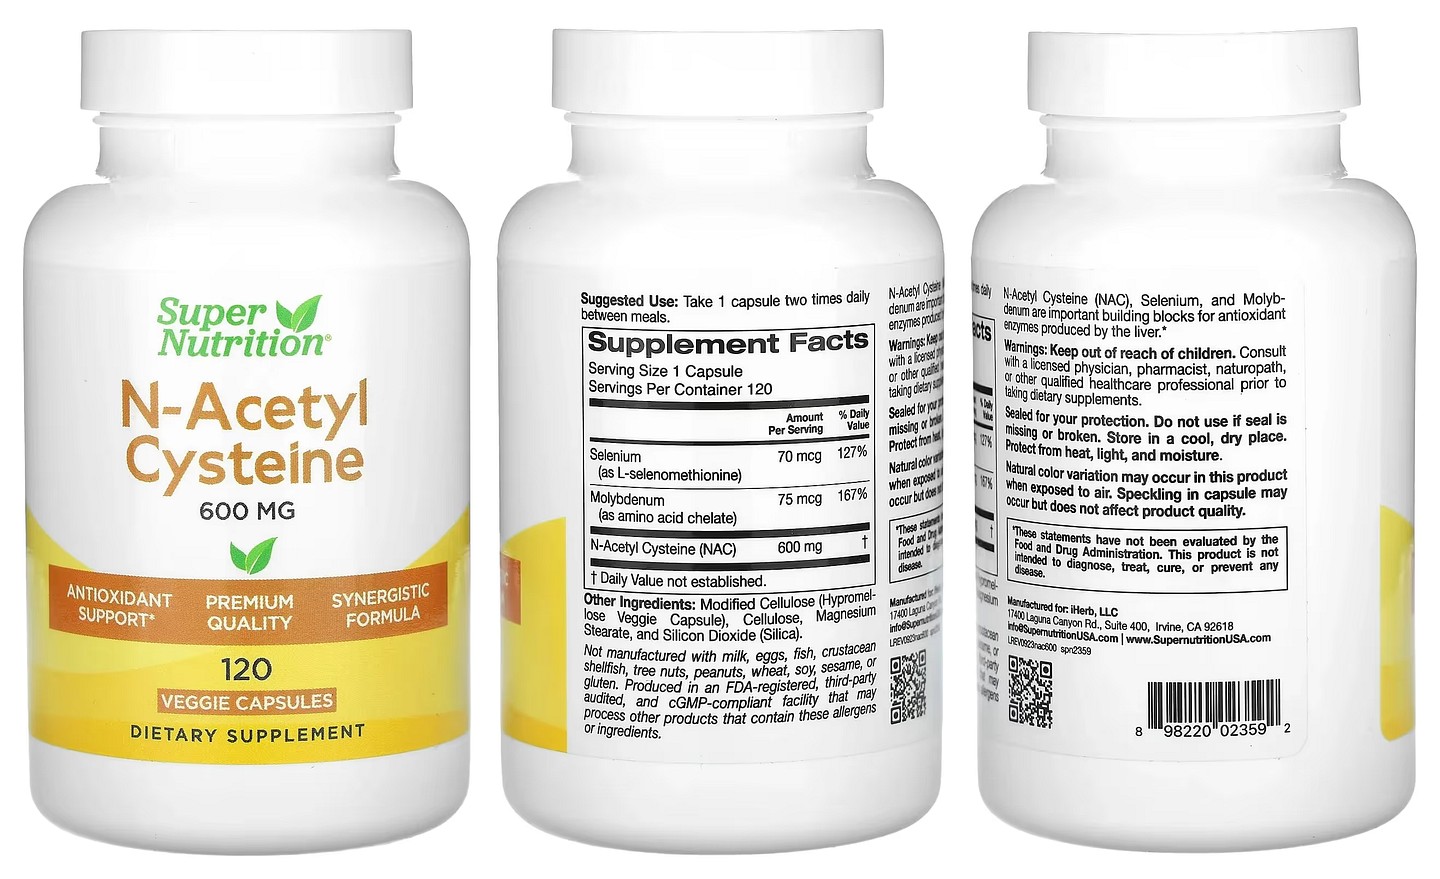 Super Nutrition, N-Acetyl Cysteine packaging